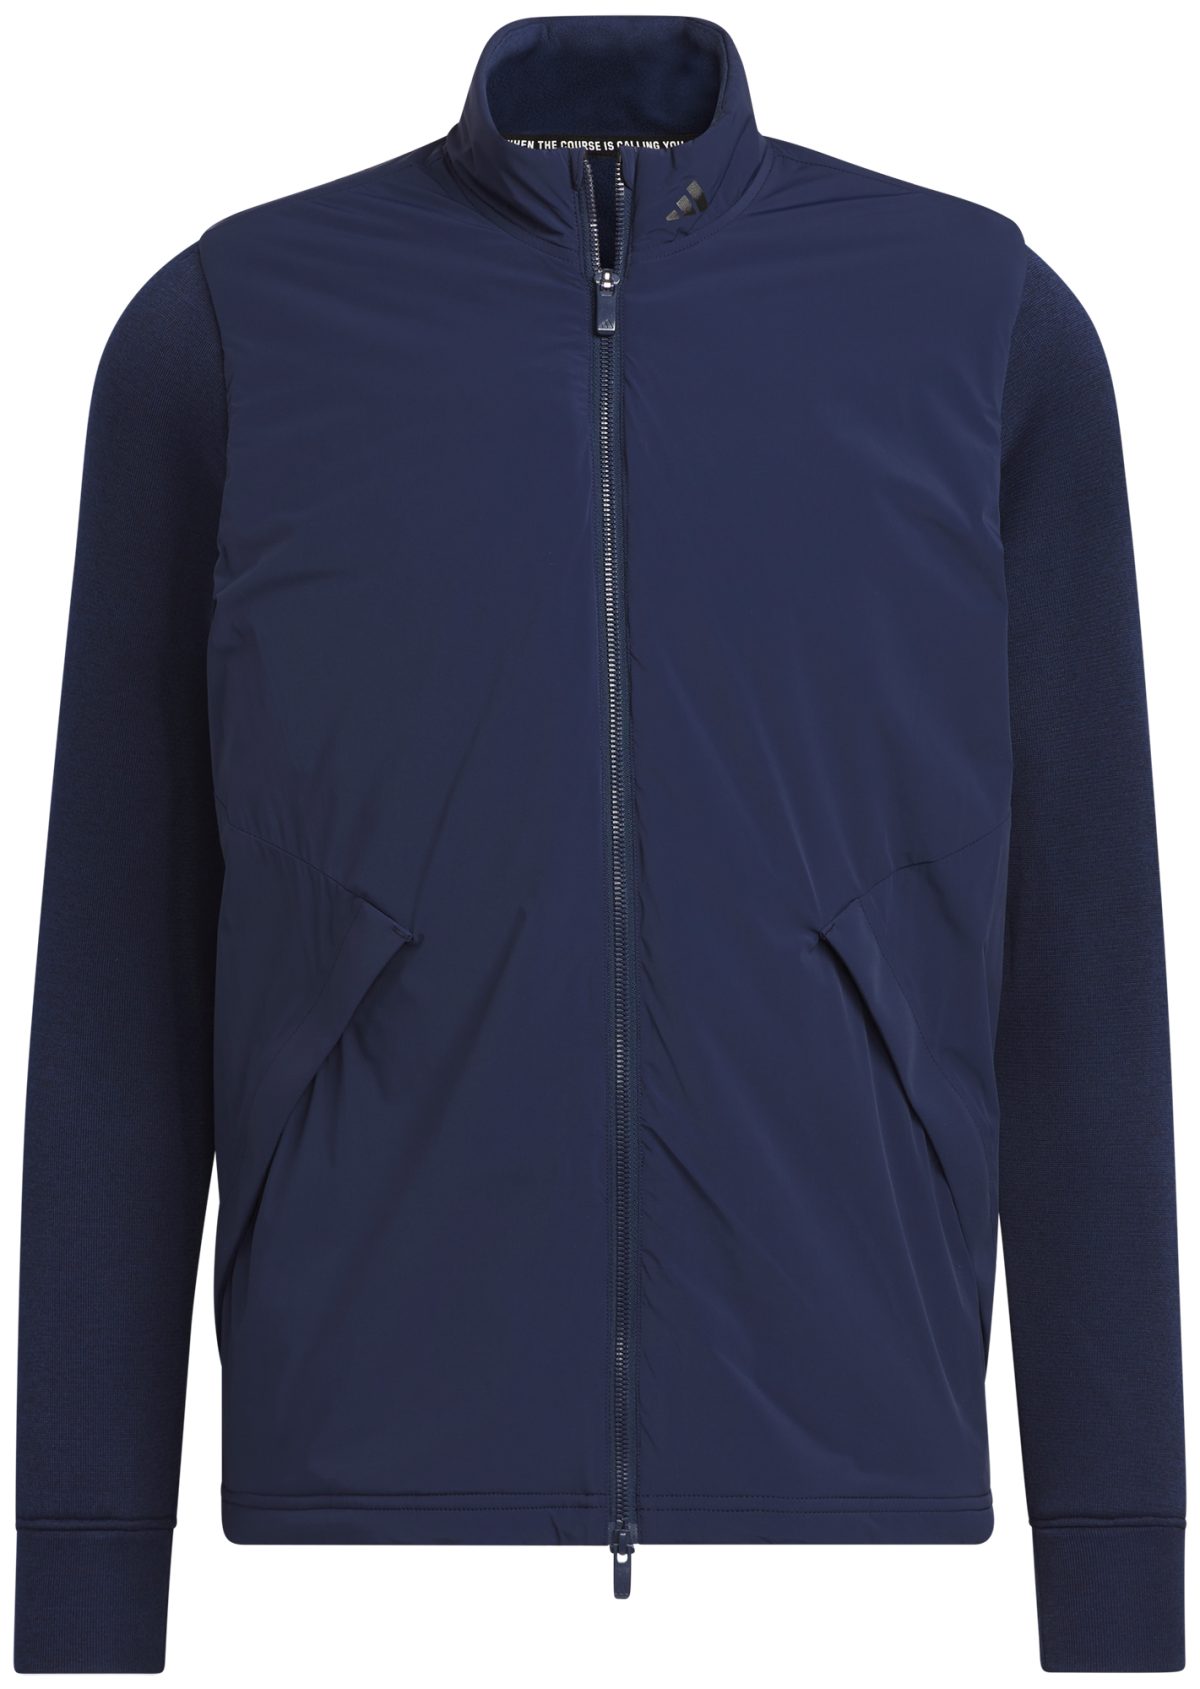 adidas Men's Ultimate365 Tour Frostguard Padded Golf Jacket, Nylon/Polyester/Elastane in Collegiate Navy, Size M